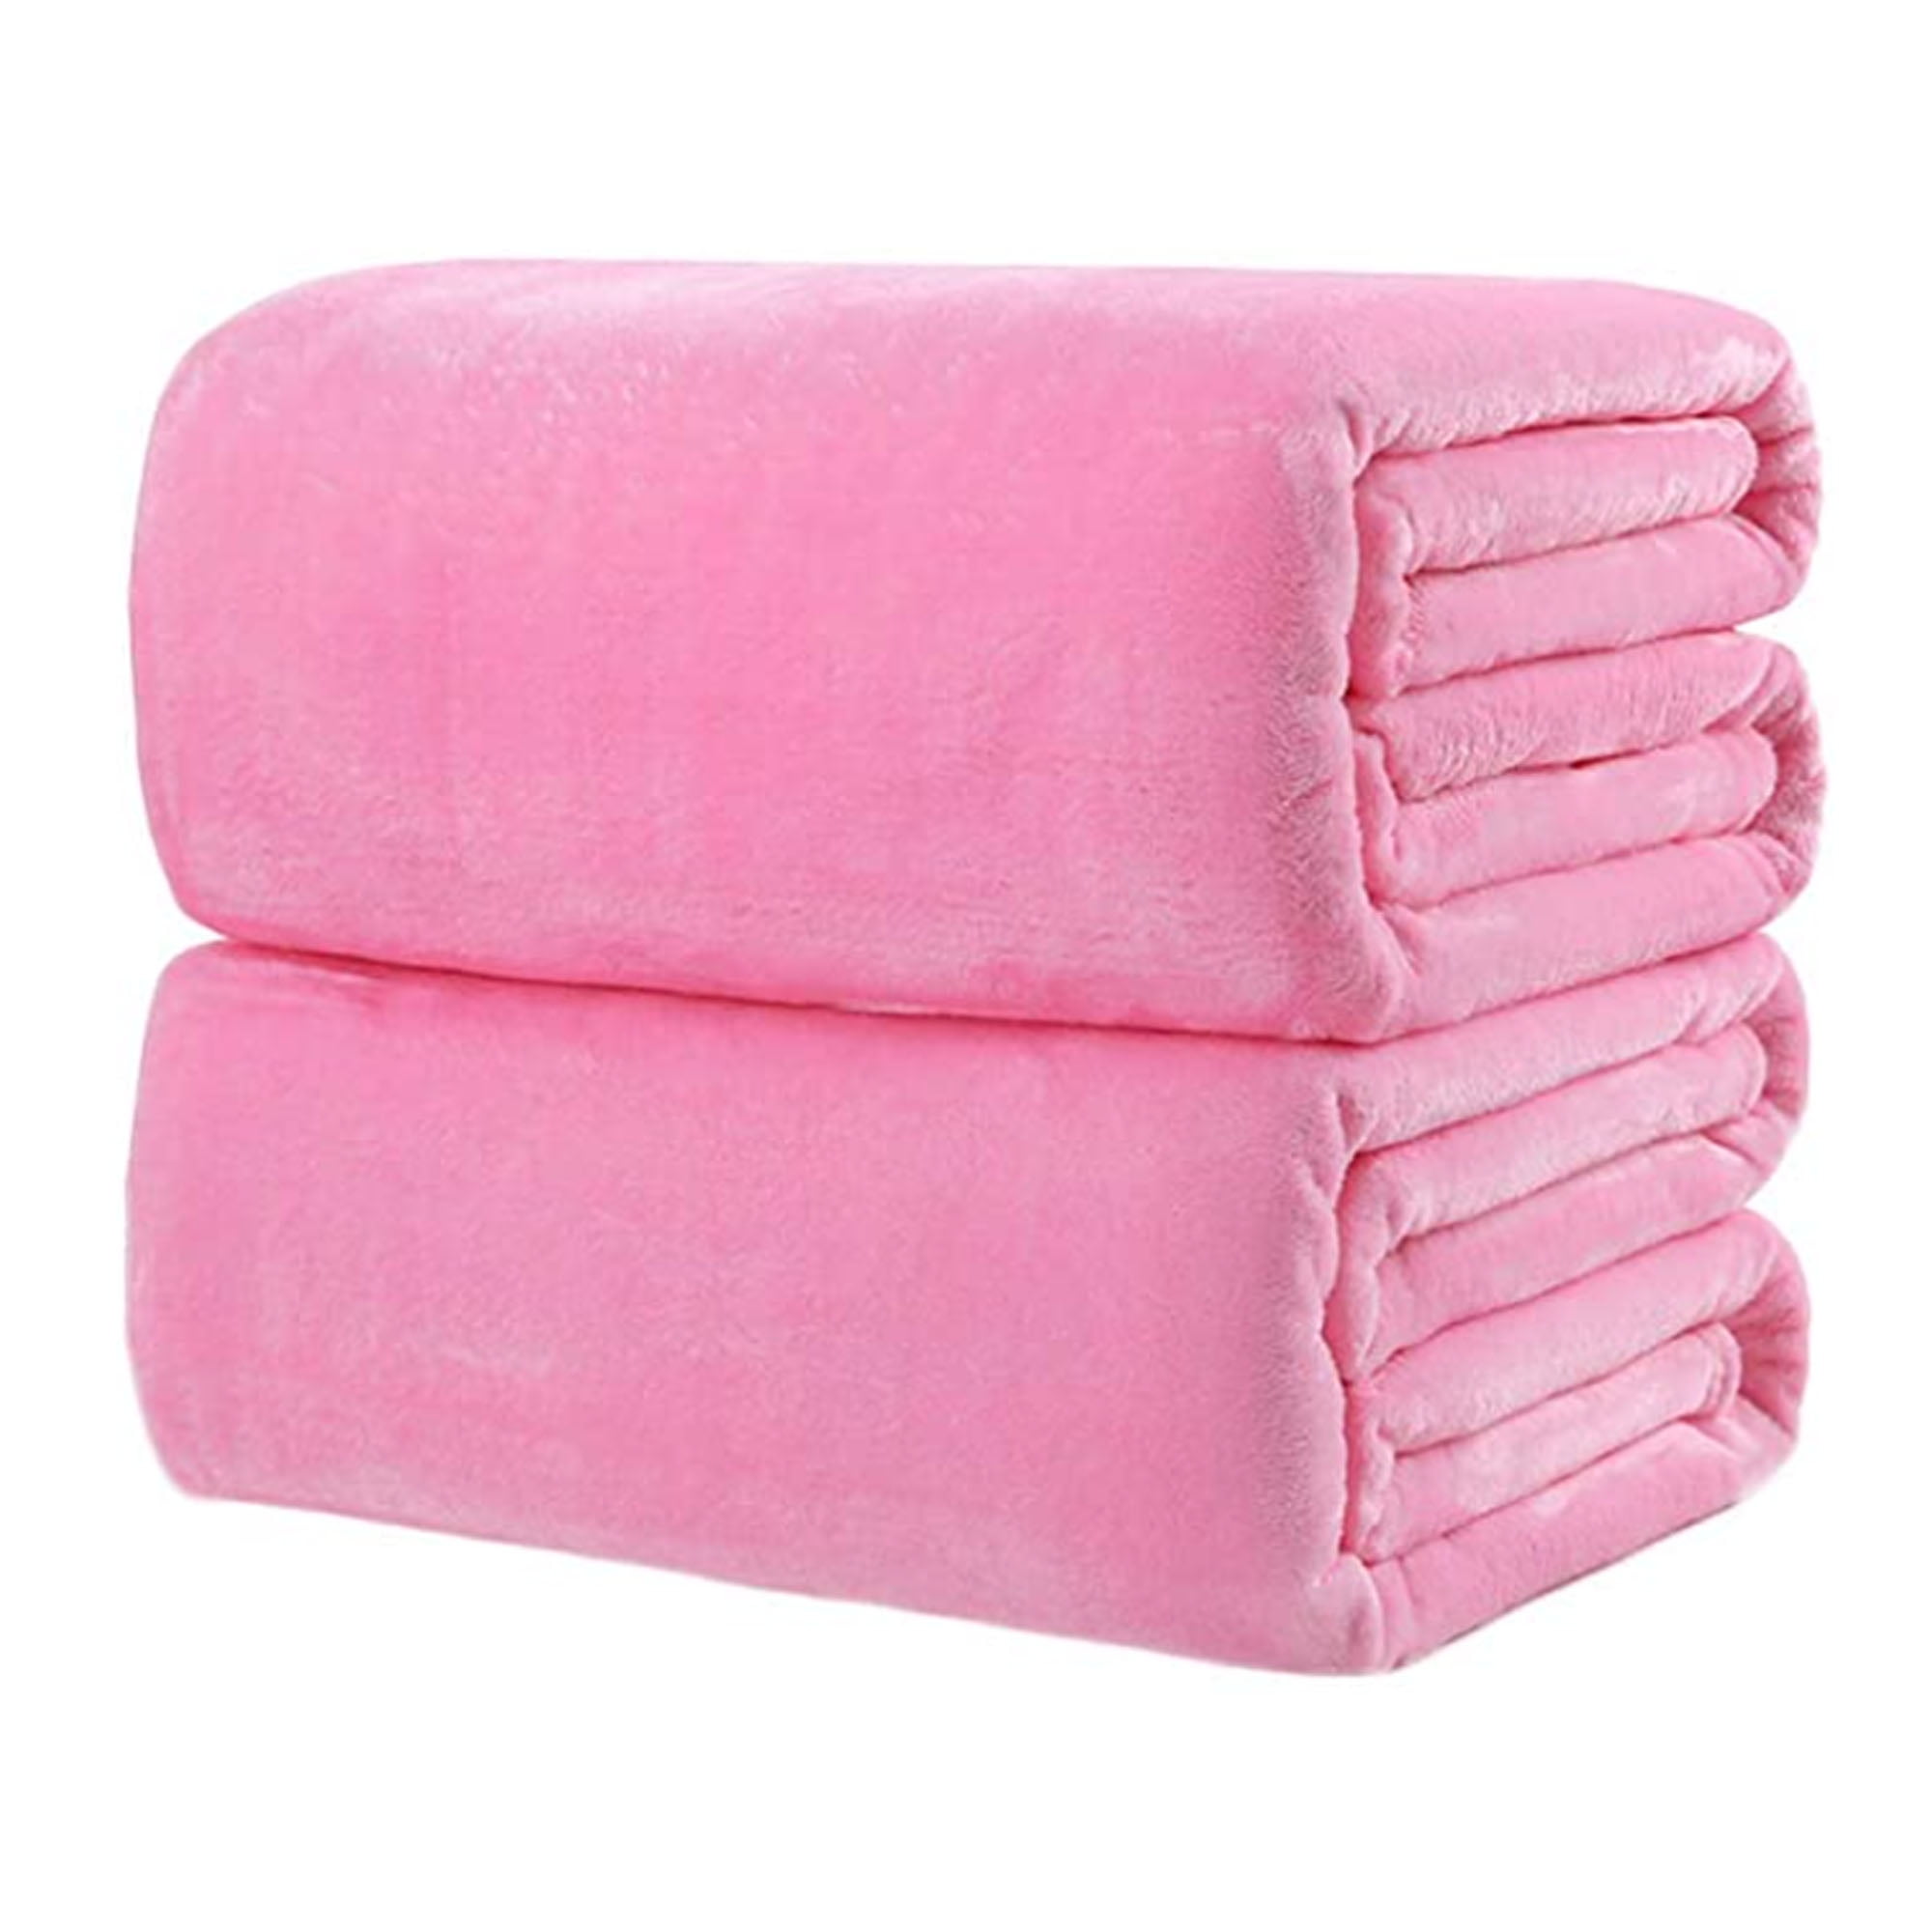 Details about   Soft Warm Coral Fleece Blanket Sheet Bedspread Sofa Plaid Flannel Blankets 2020